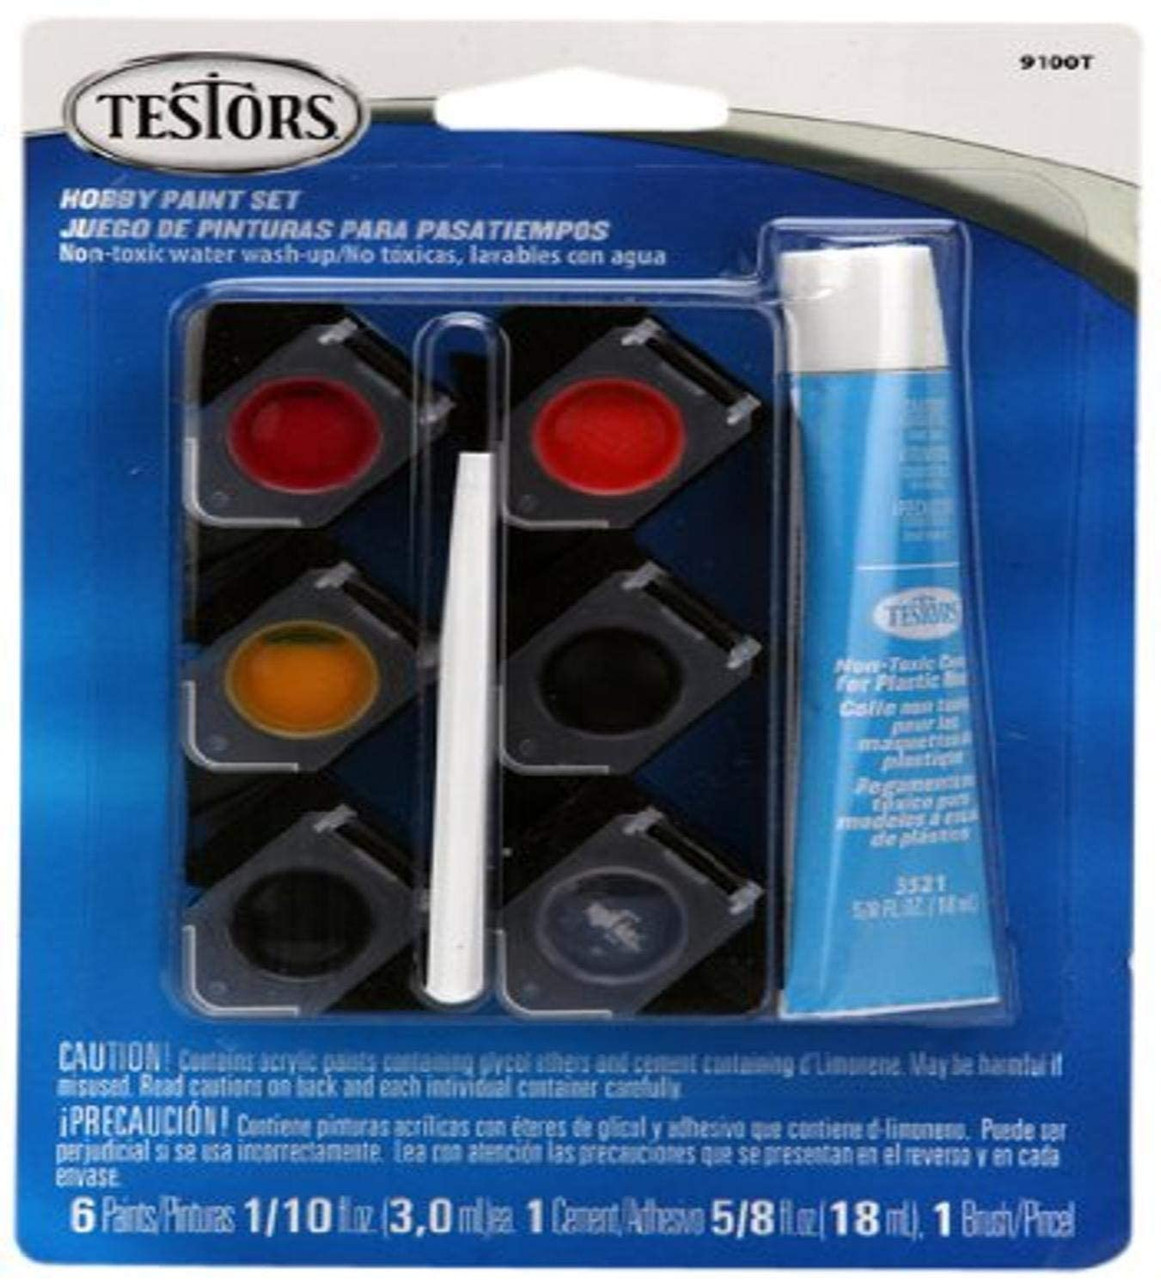 Testors 290291 Acrylic Paint Sets 